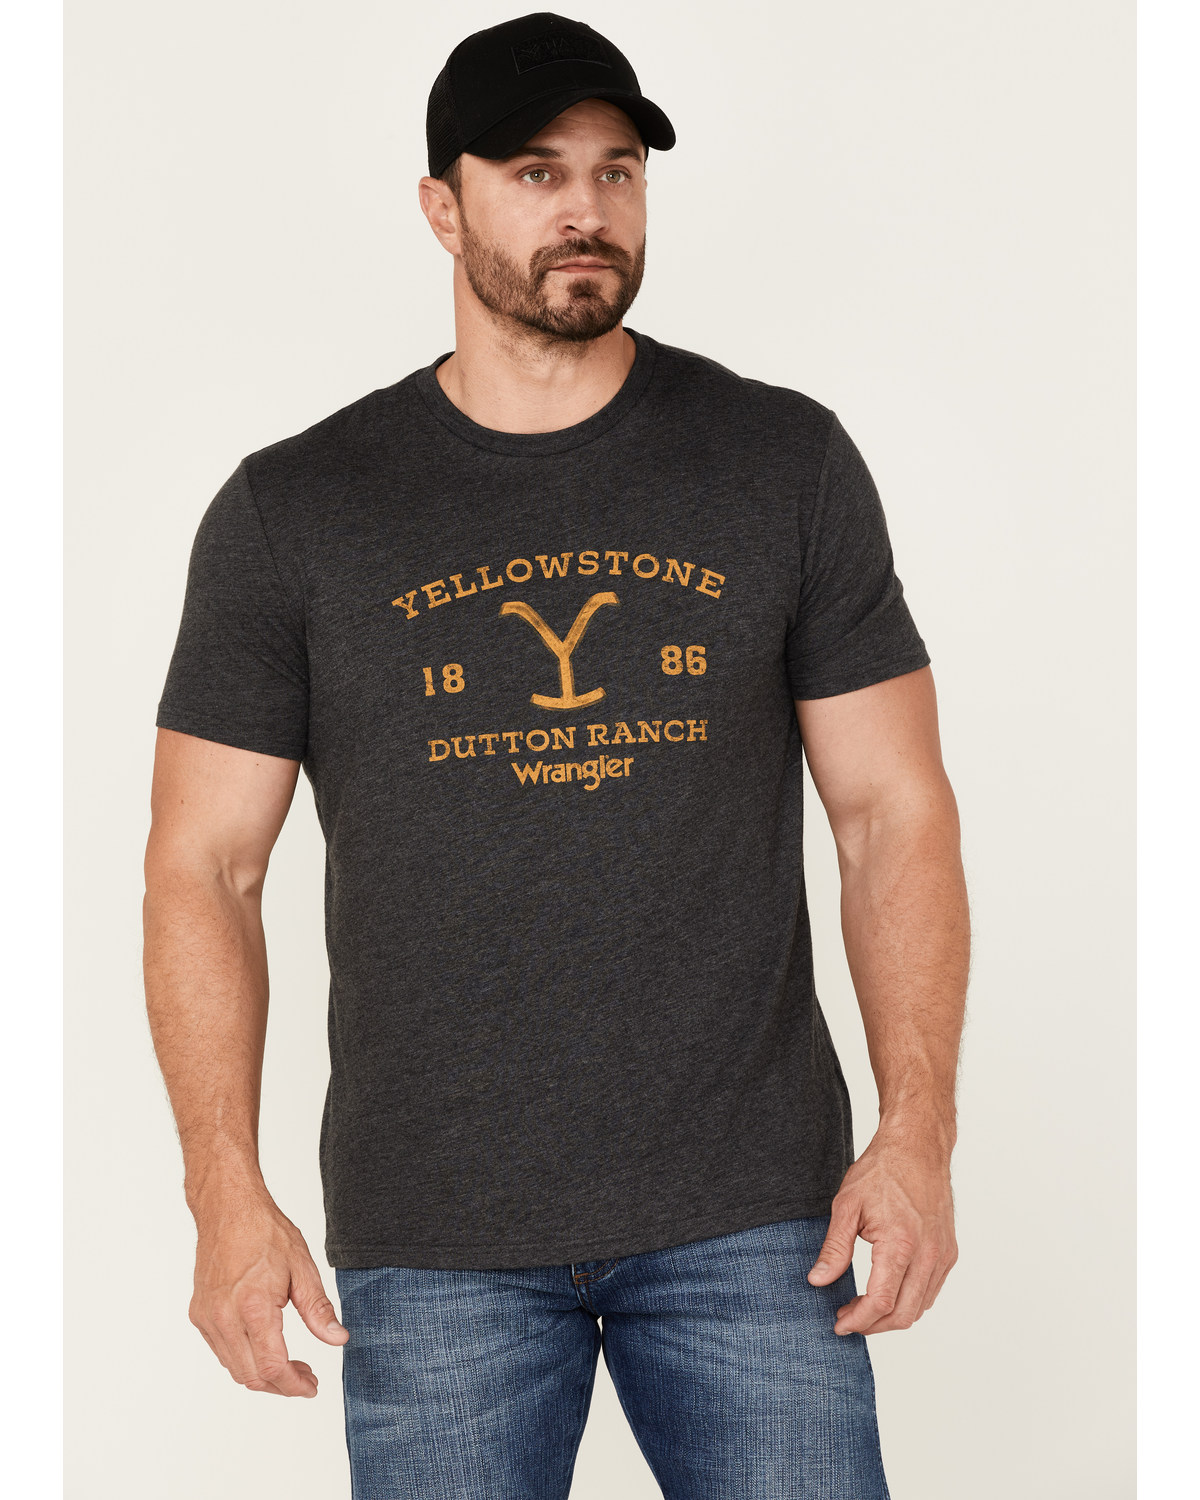 Wrangler Men's Heathered Yellowstone Dutton Ranch Logo Graphic T-Shirt